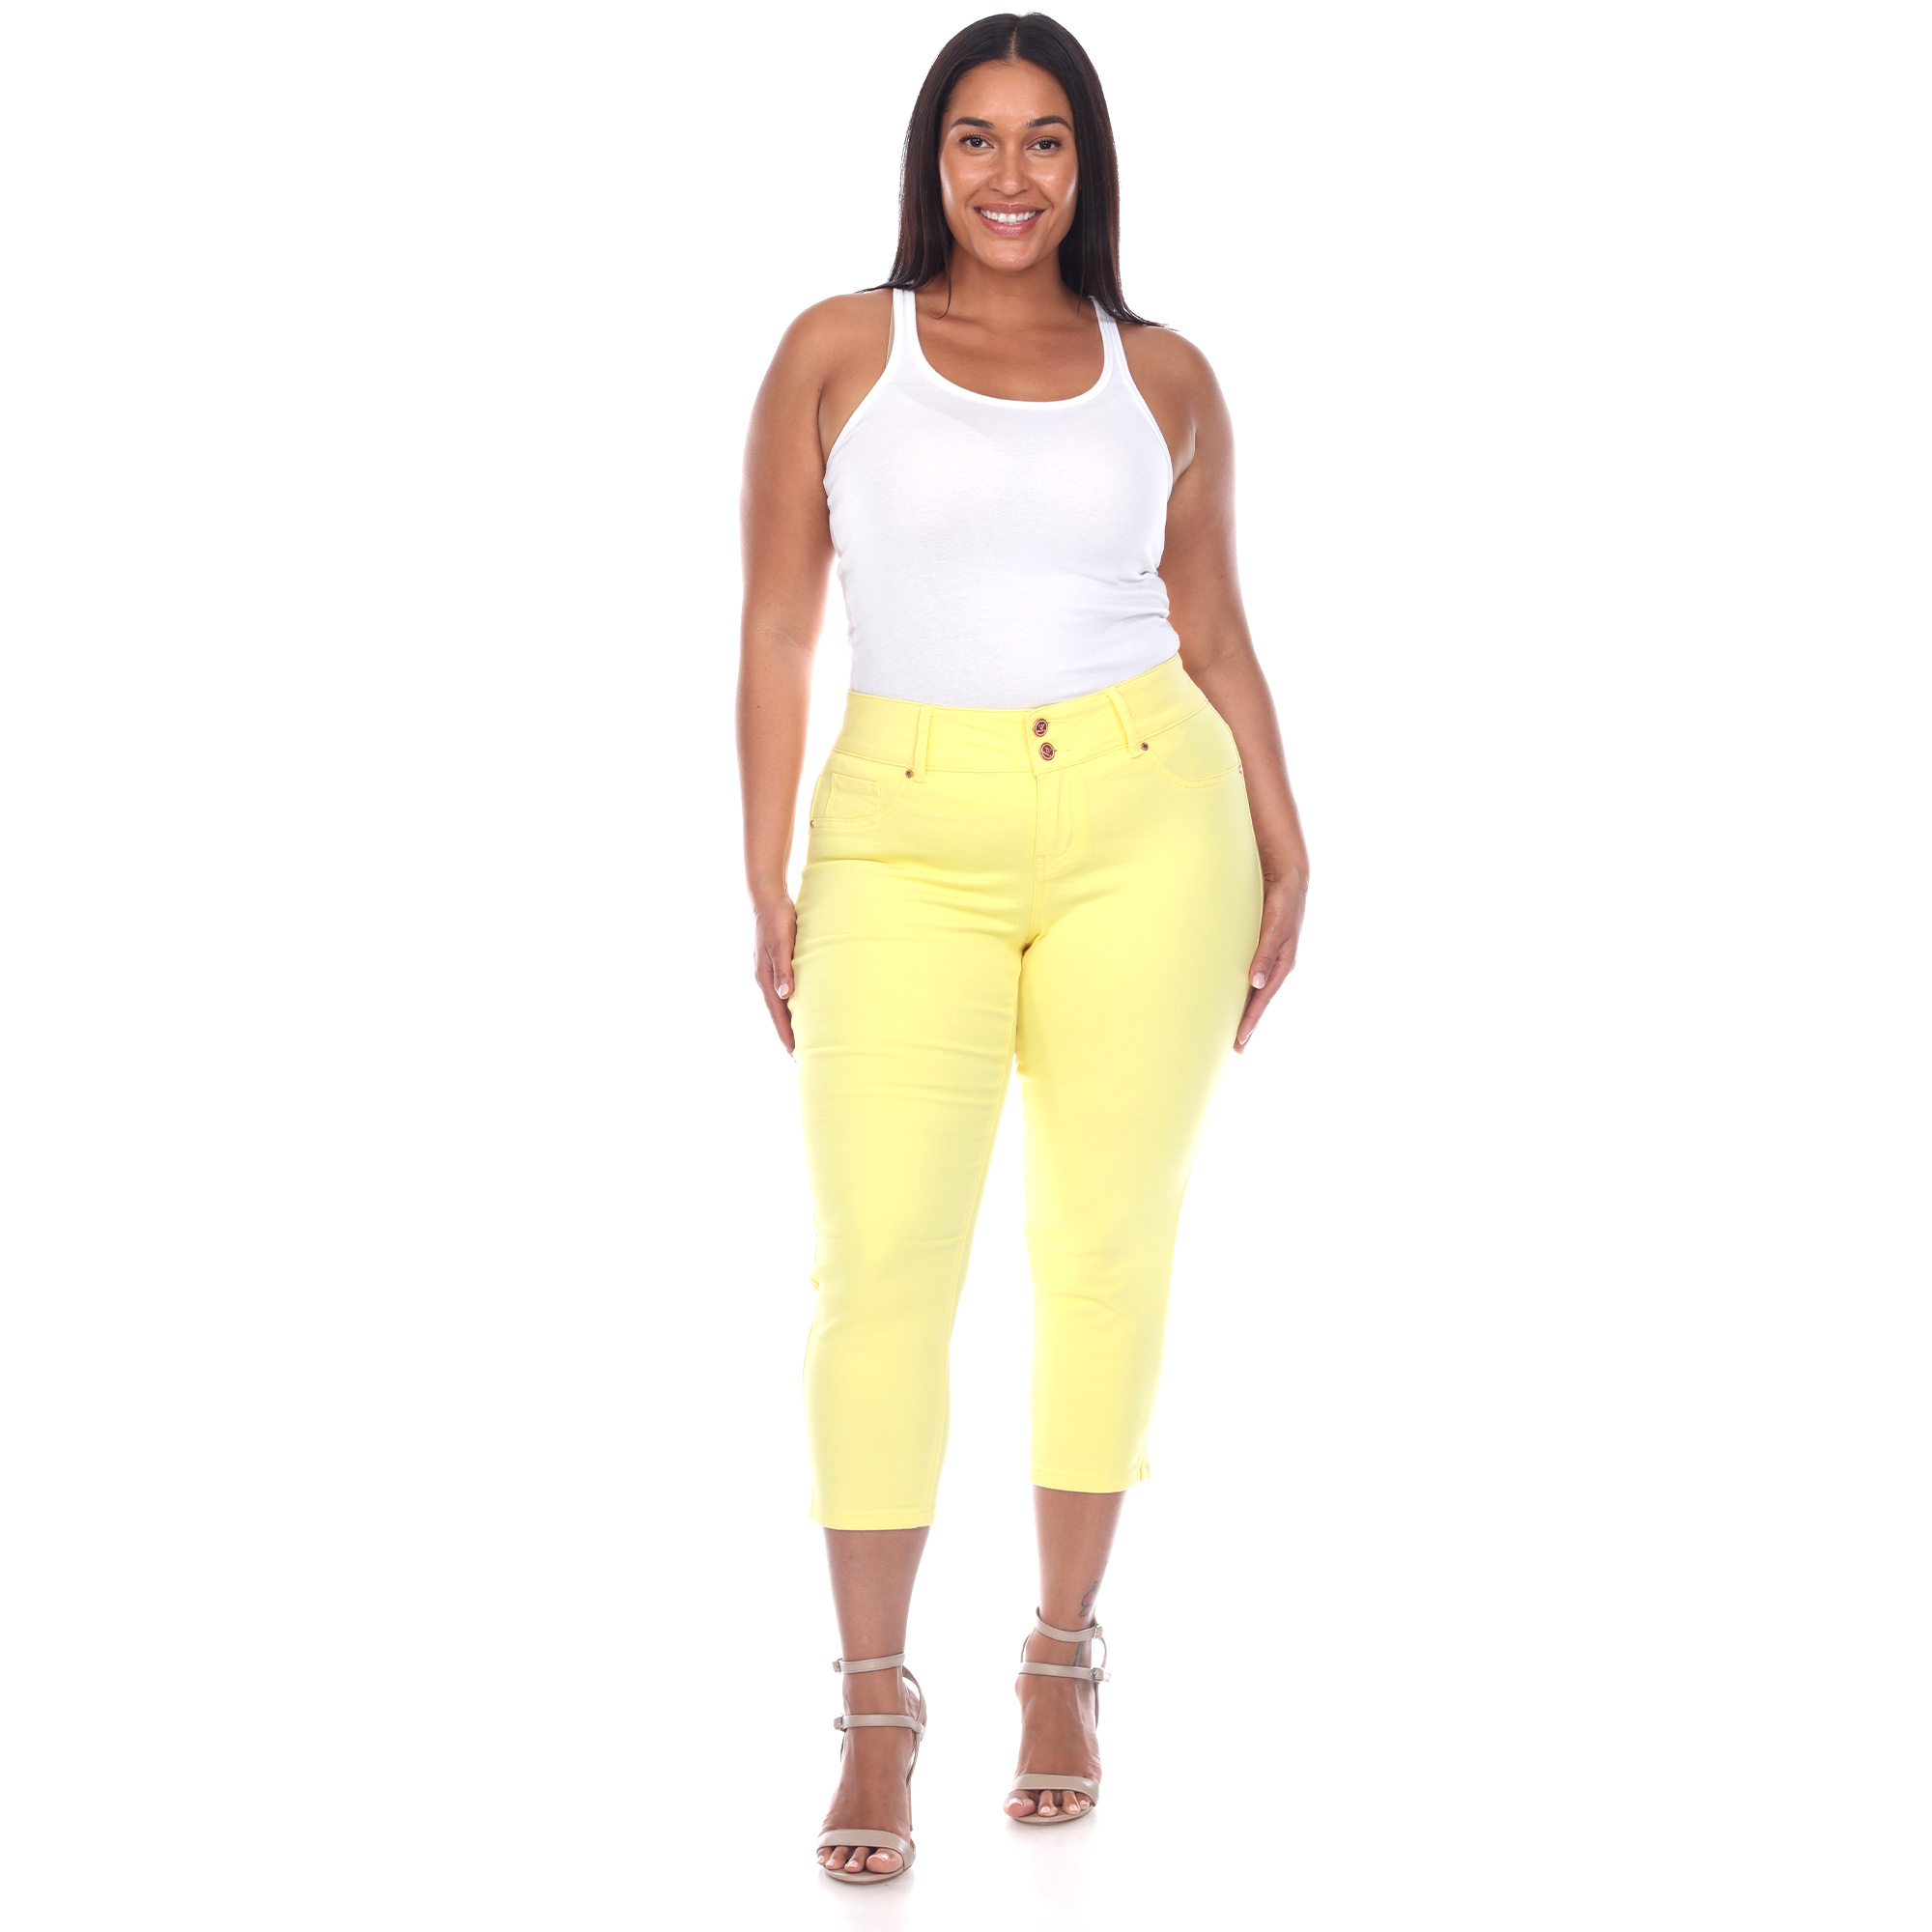 White Mark Womenâs Capri Jeans - Yellow, 16